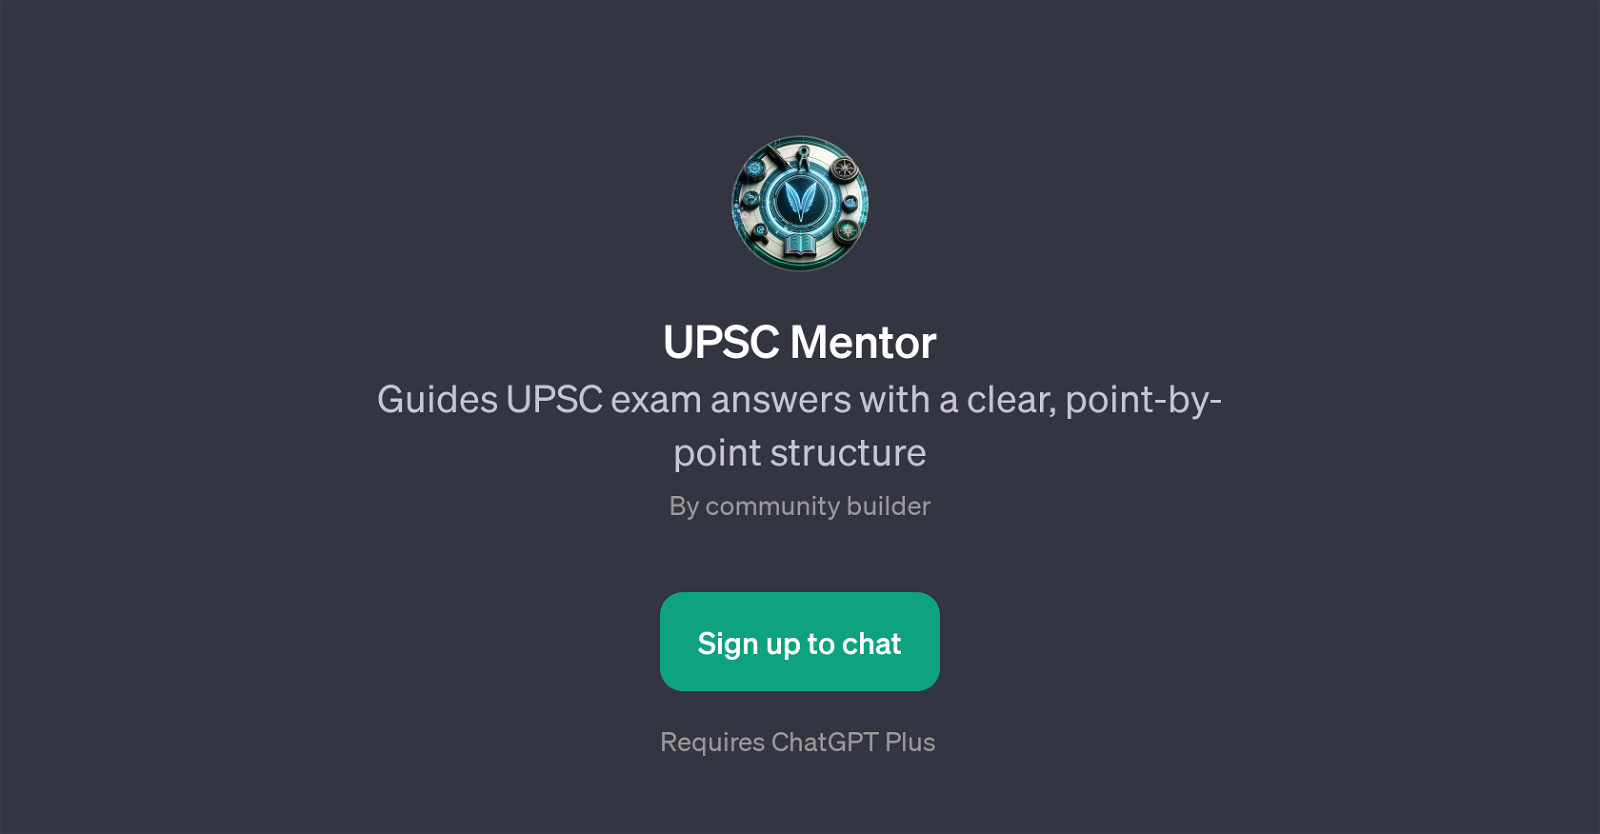 UPSC Mentor website